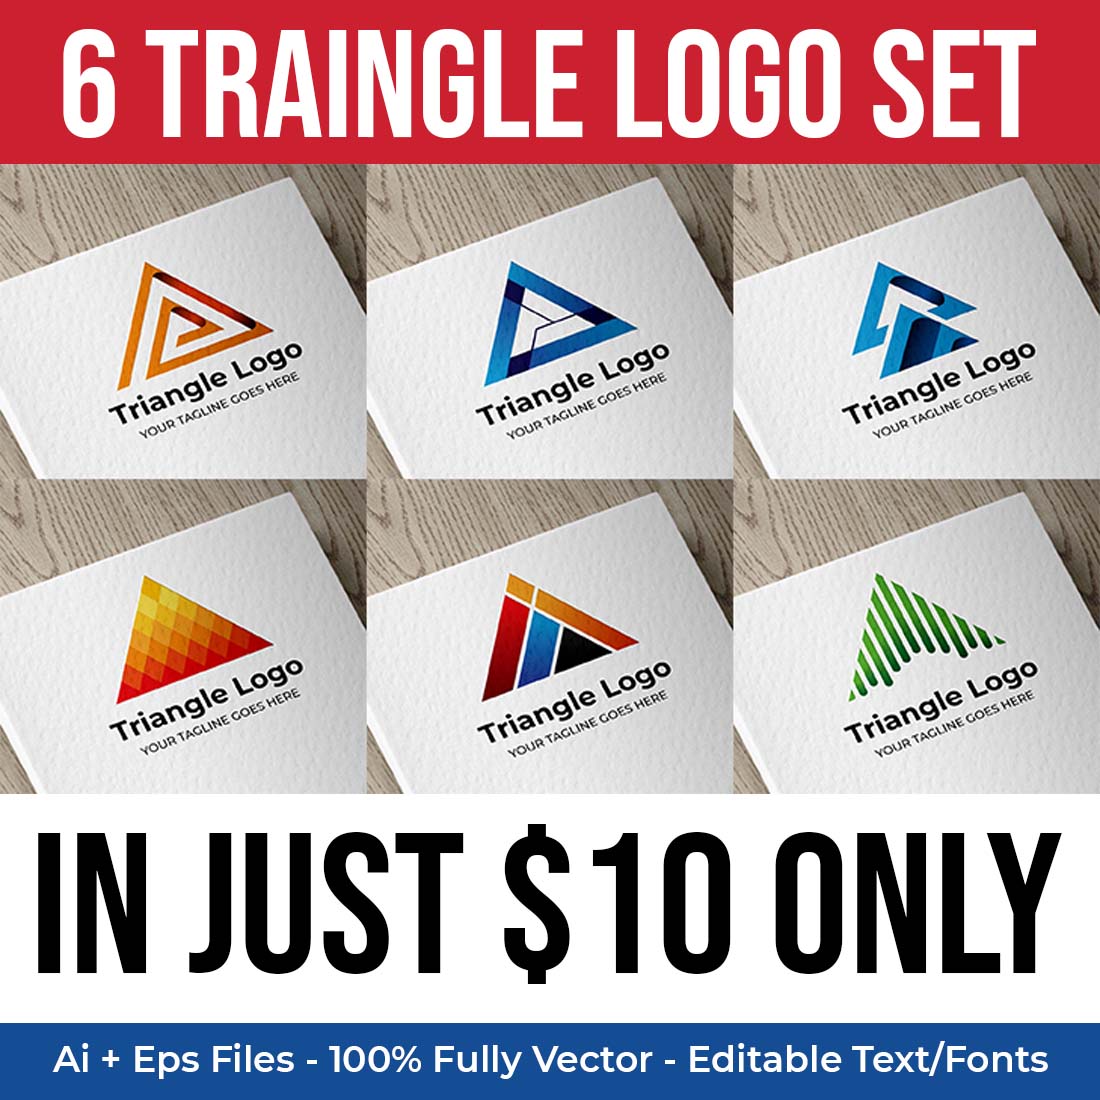 Triangle Logo Set cover image.